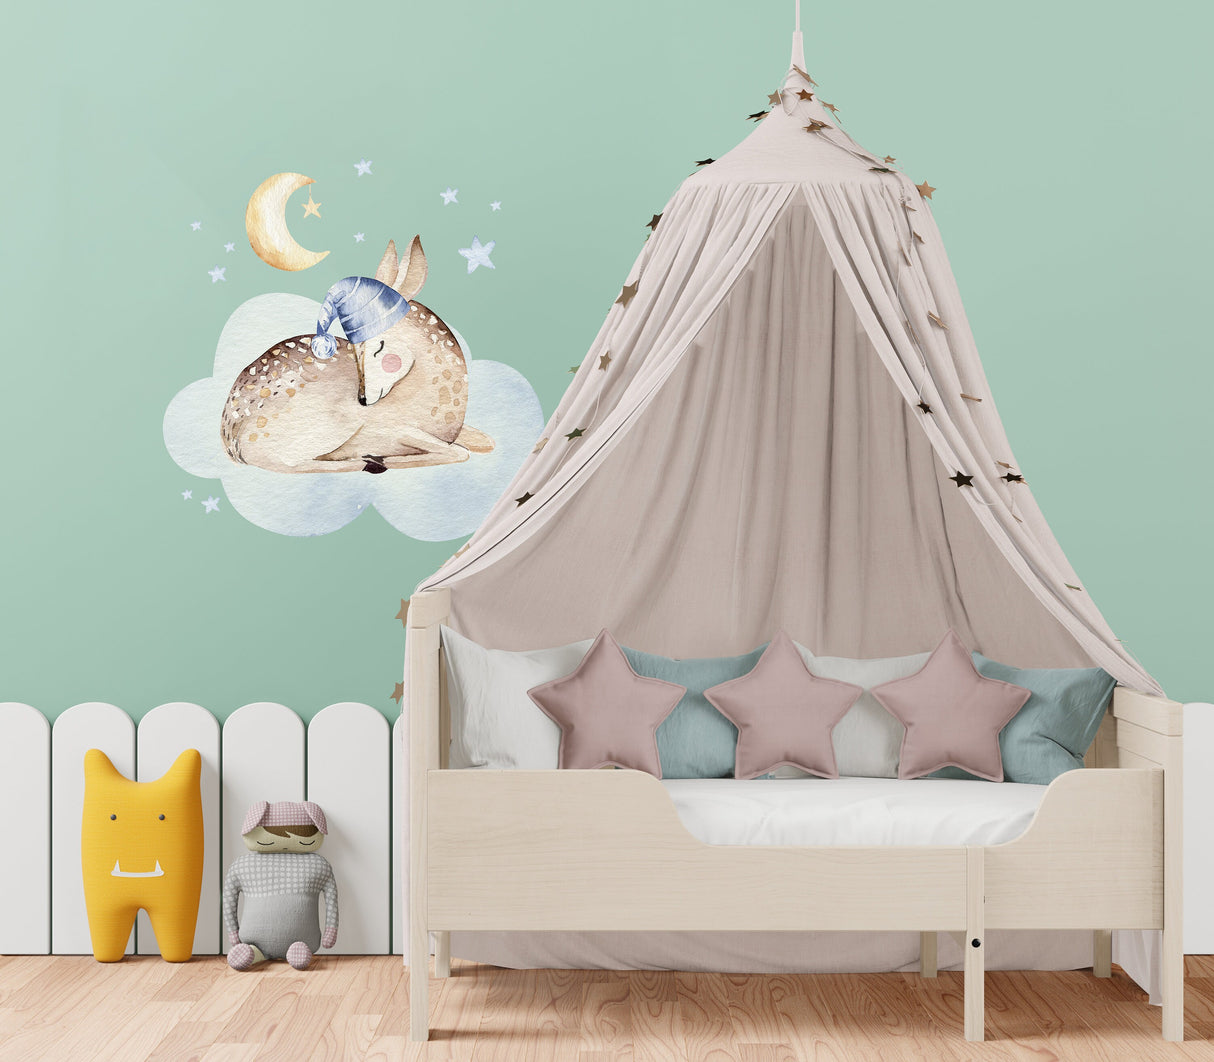 Baby Nursery Wall Decor Sticker - Animal Cloud Dream Decal For Boy Girl Room